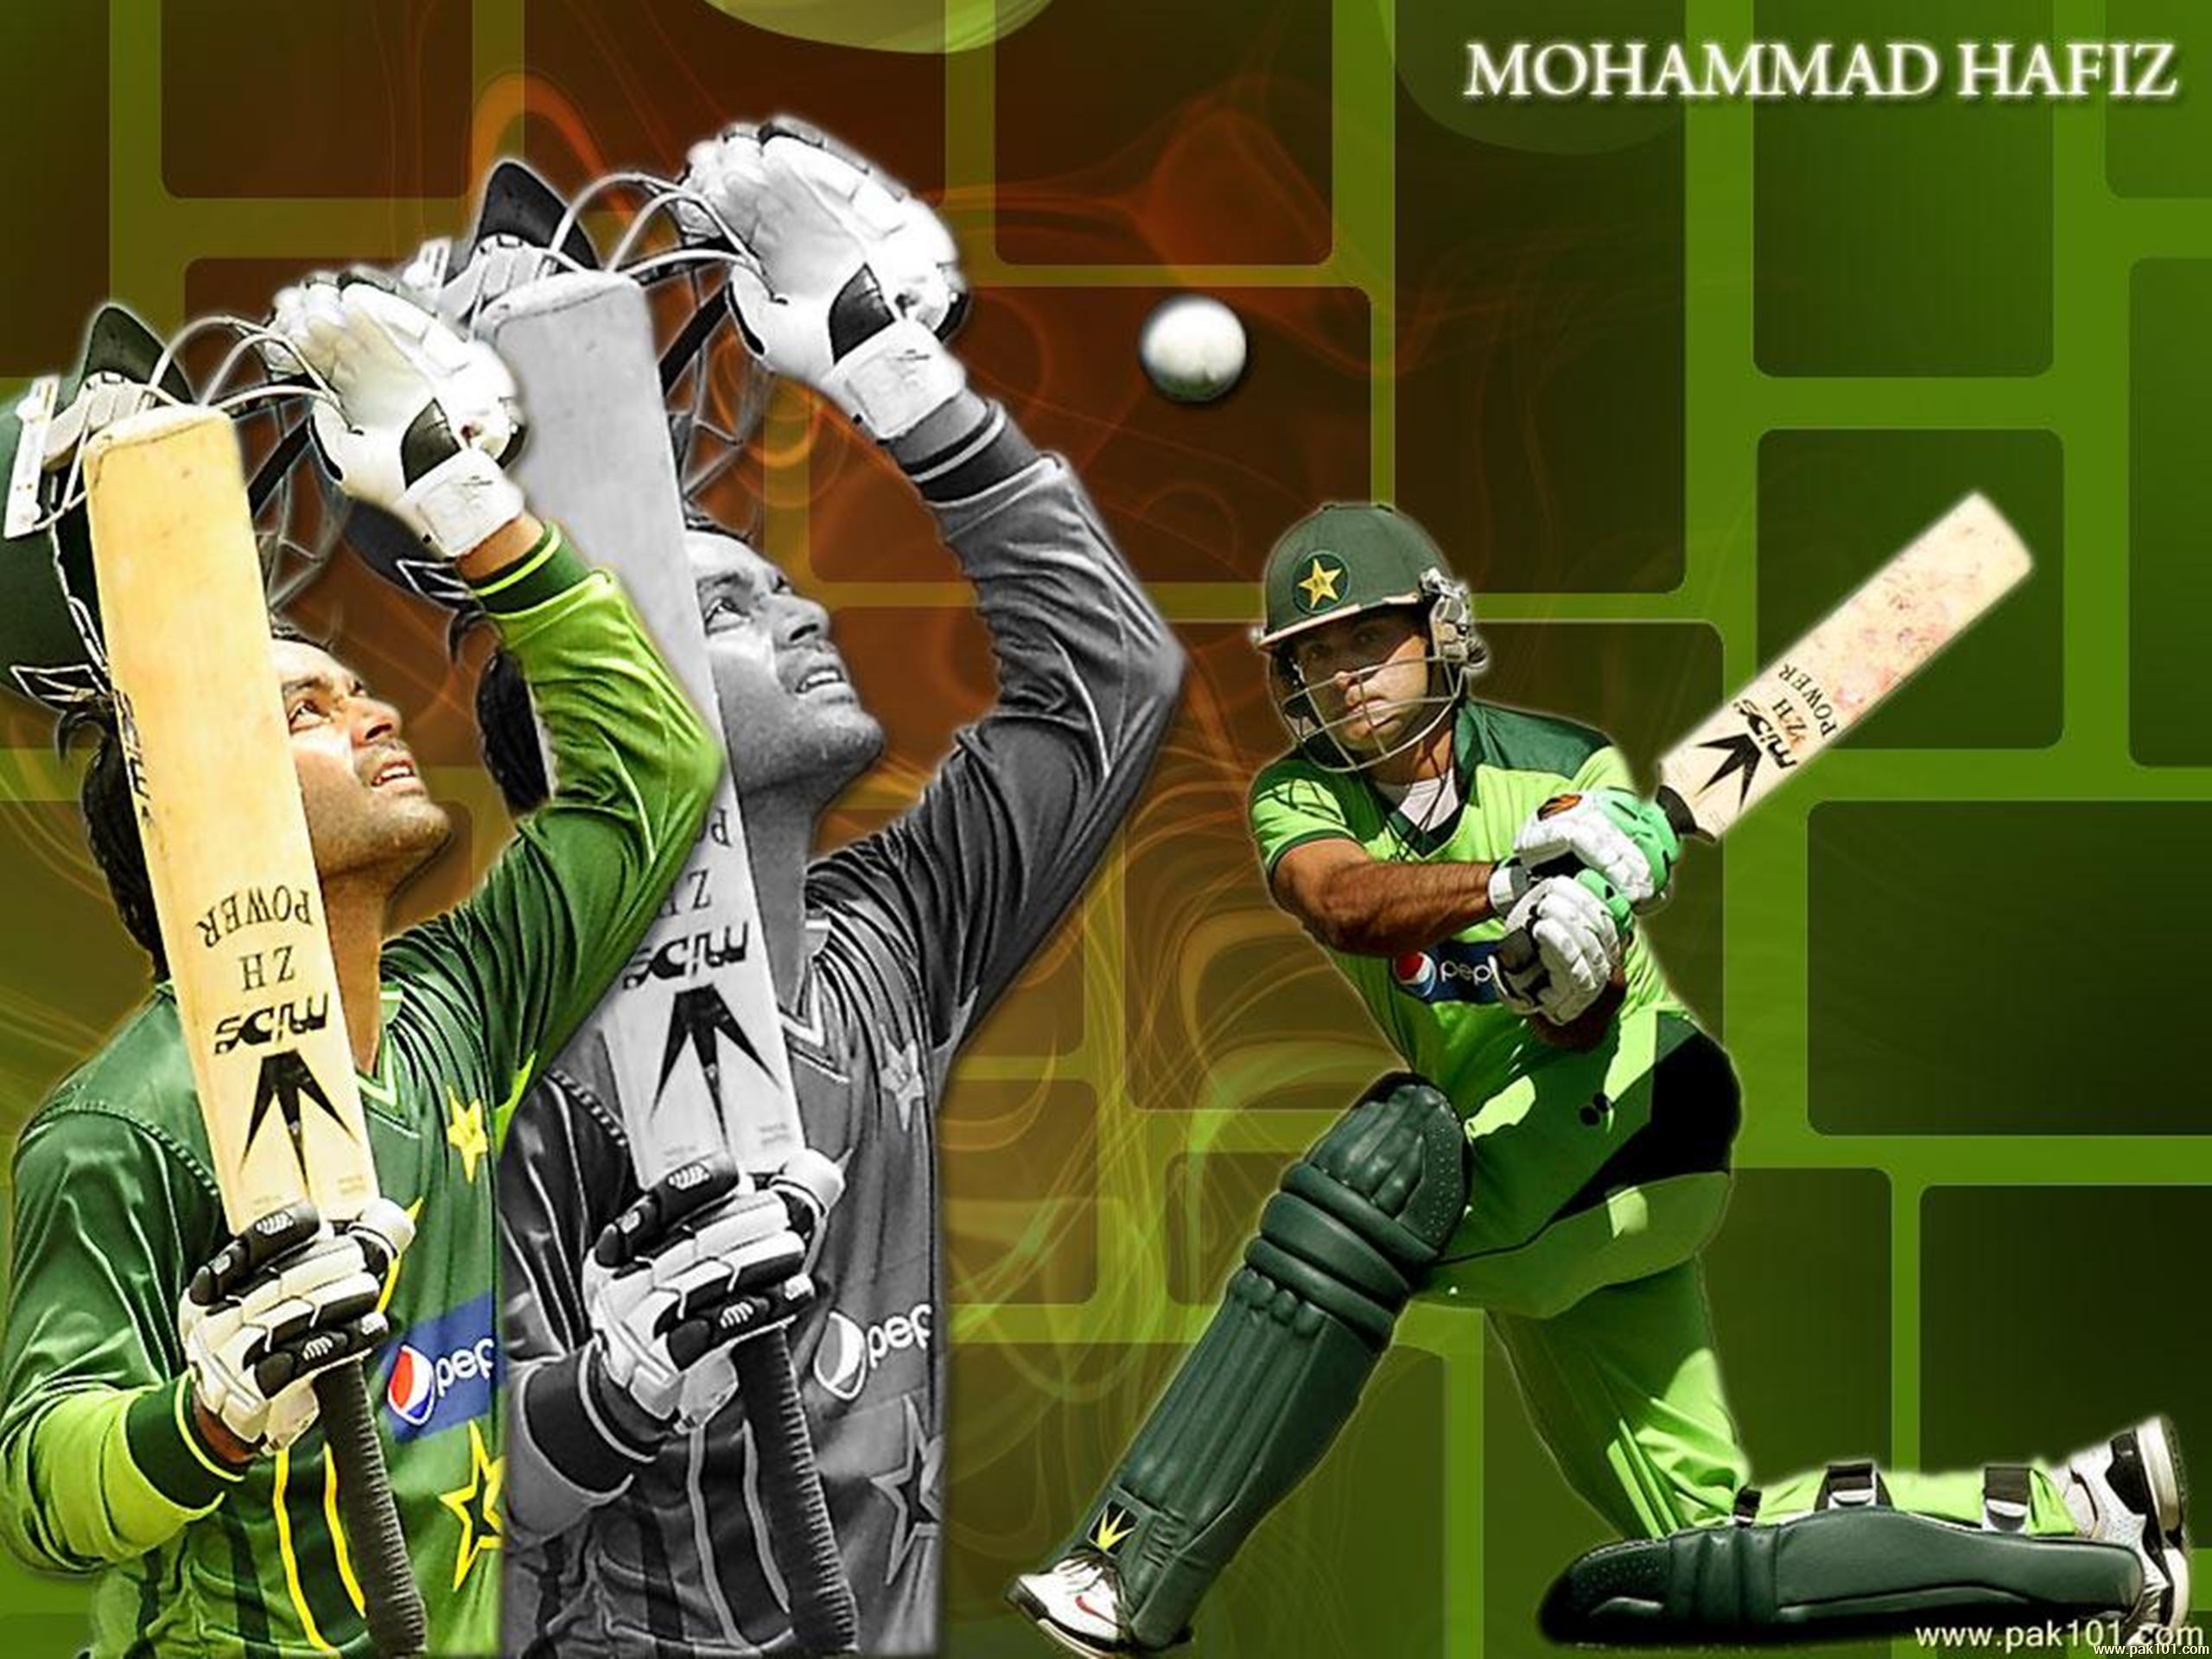 Wallpapers Cricketers Mohammad Hafeez Mohammad Hafeez high 2560x1920